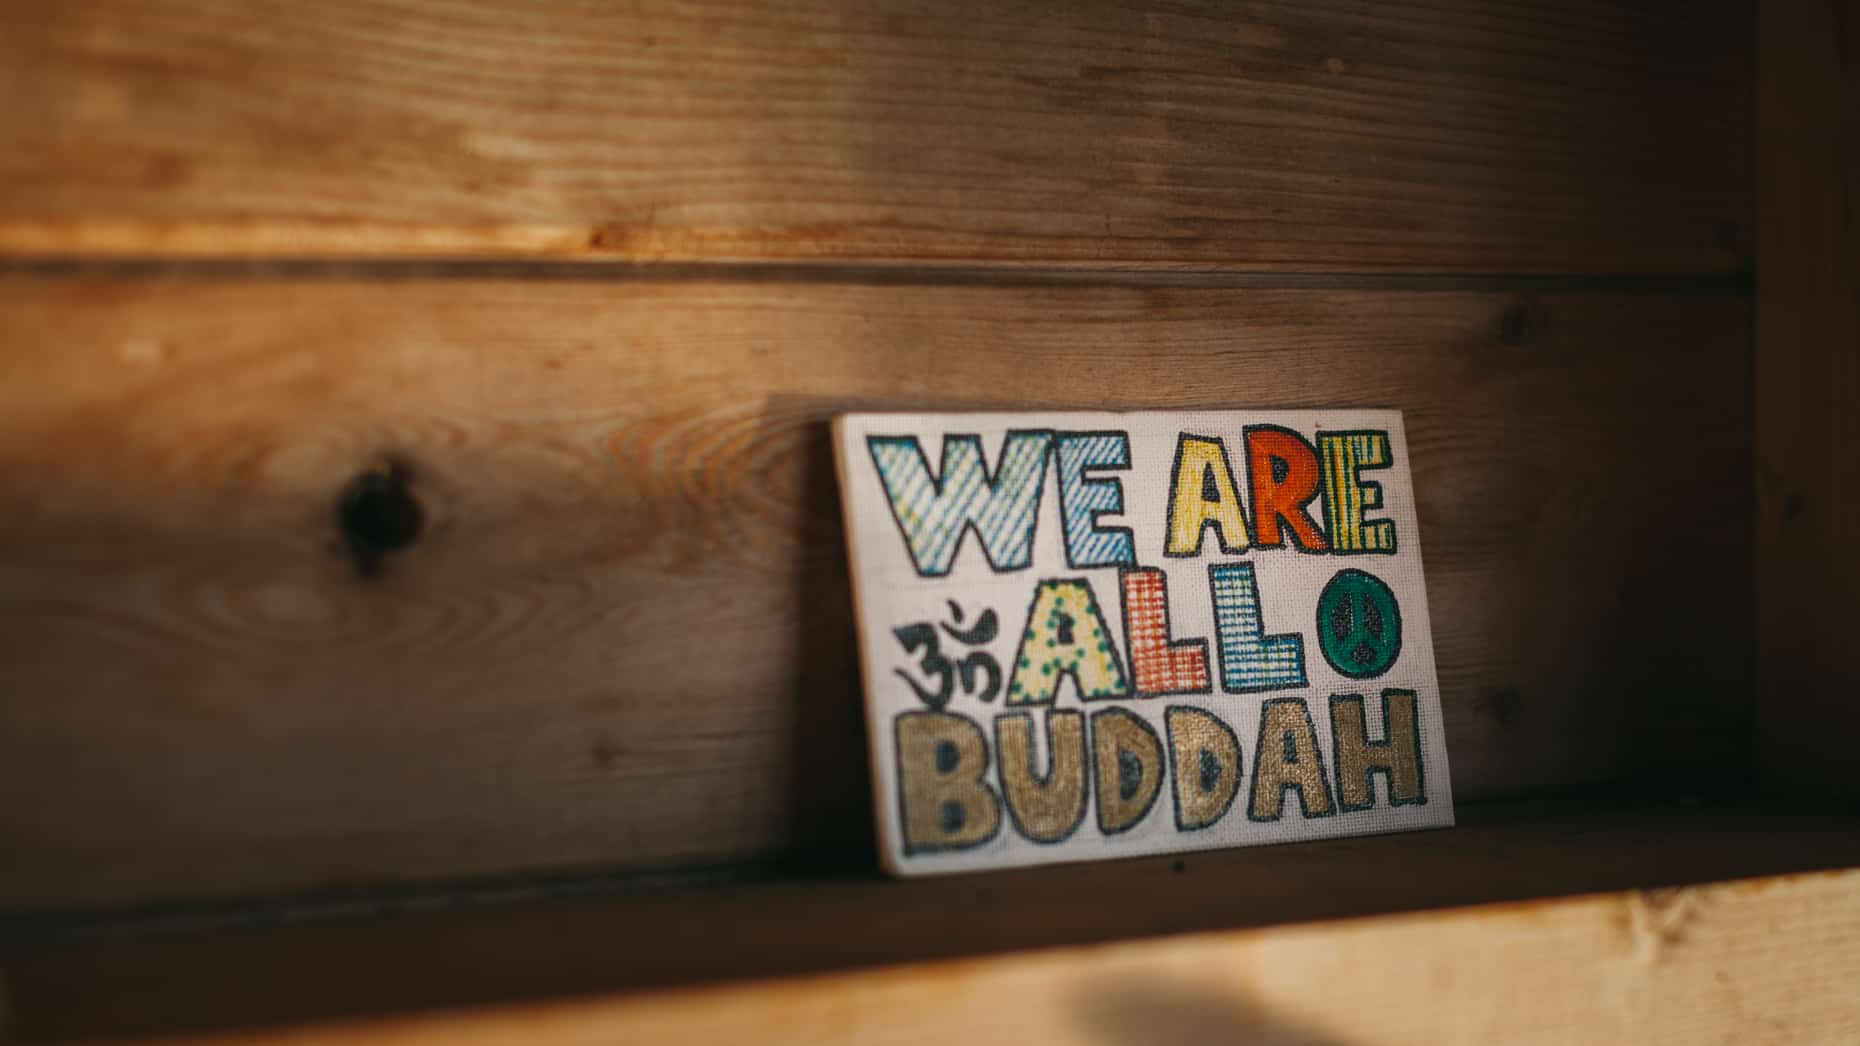 We are all Buddah.